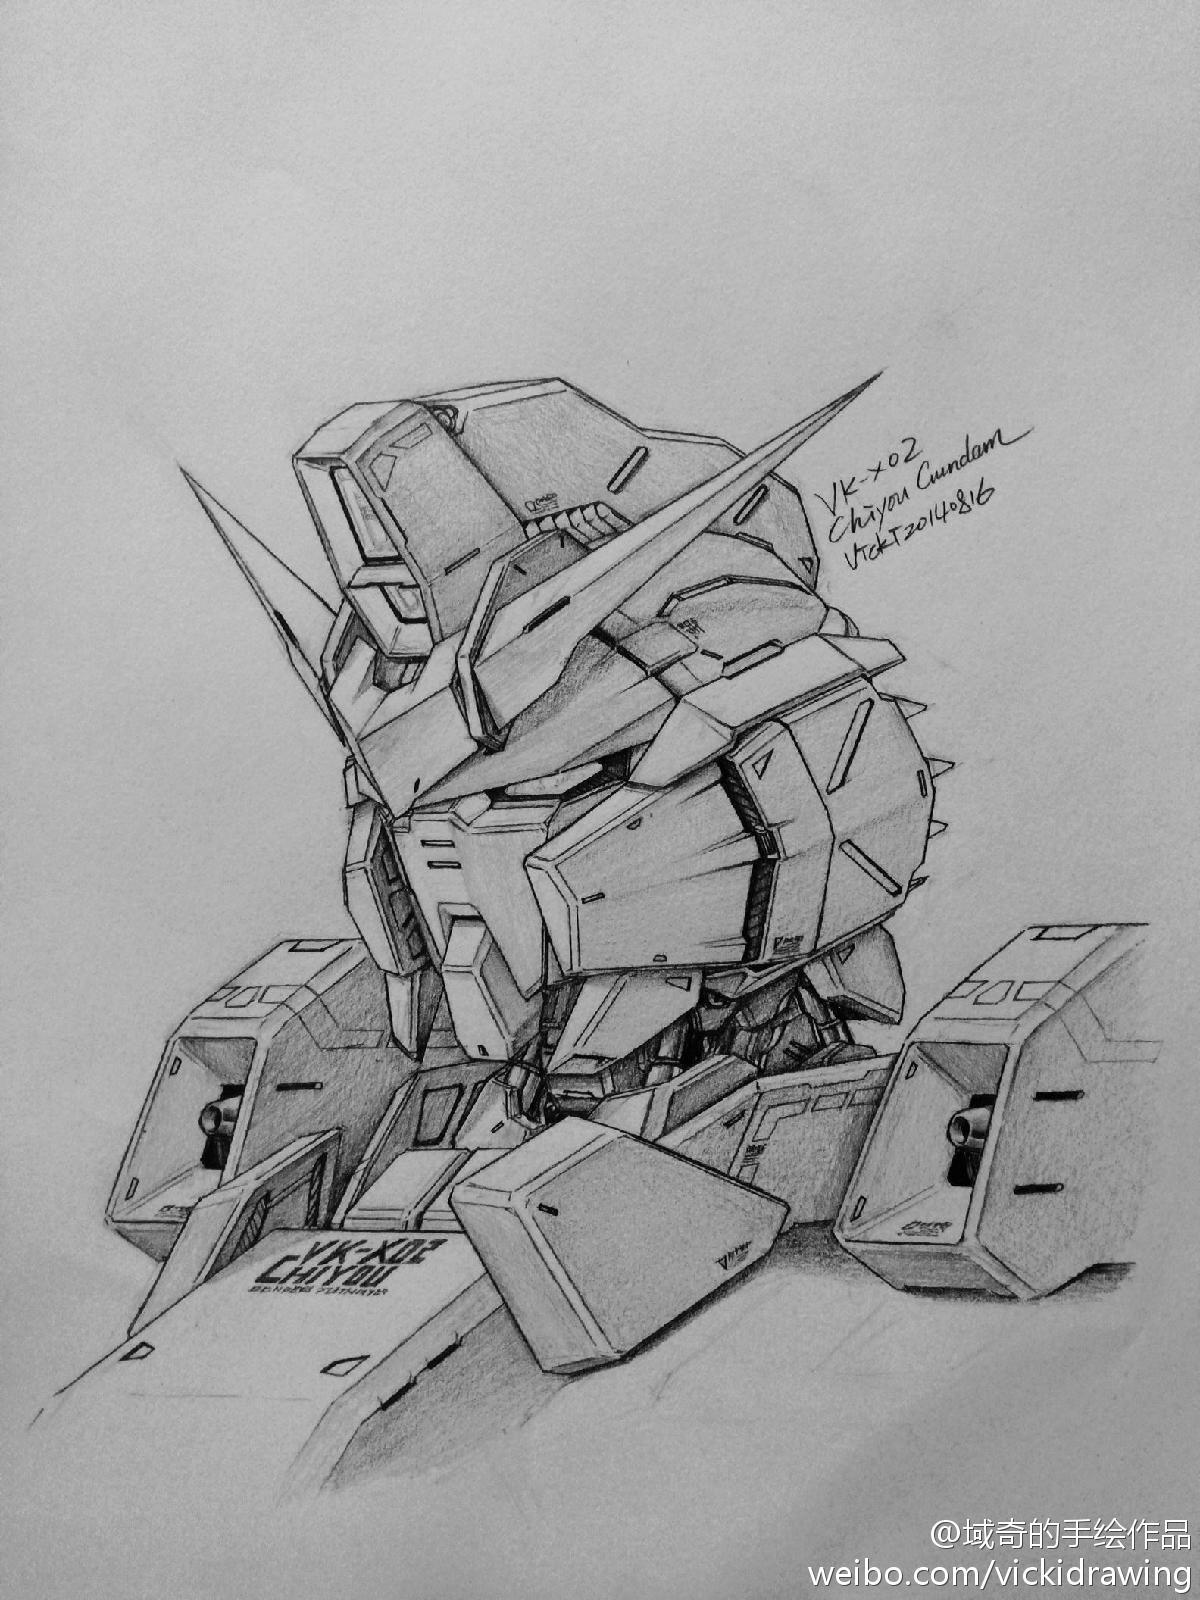 GUNDAM GUY: Awesome Gundam Sketches by VickiDrawing [Updated 2/9/17]